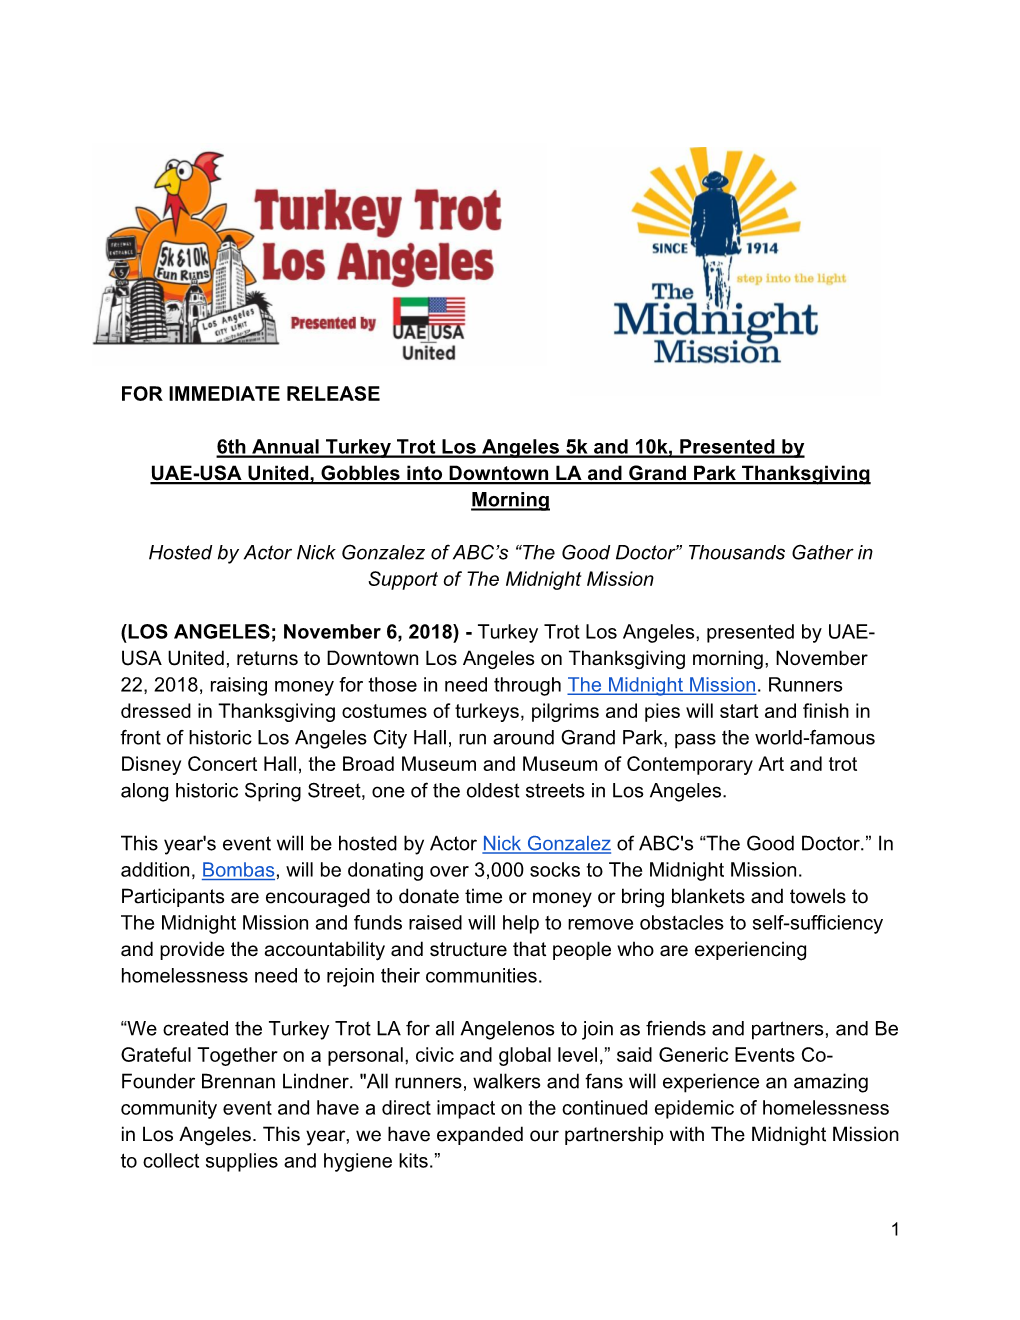 FOR IMMEDIATE RELEASE 6Th Annual Turkey Trot Los Angeles 5K